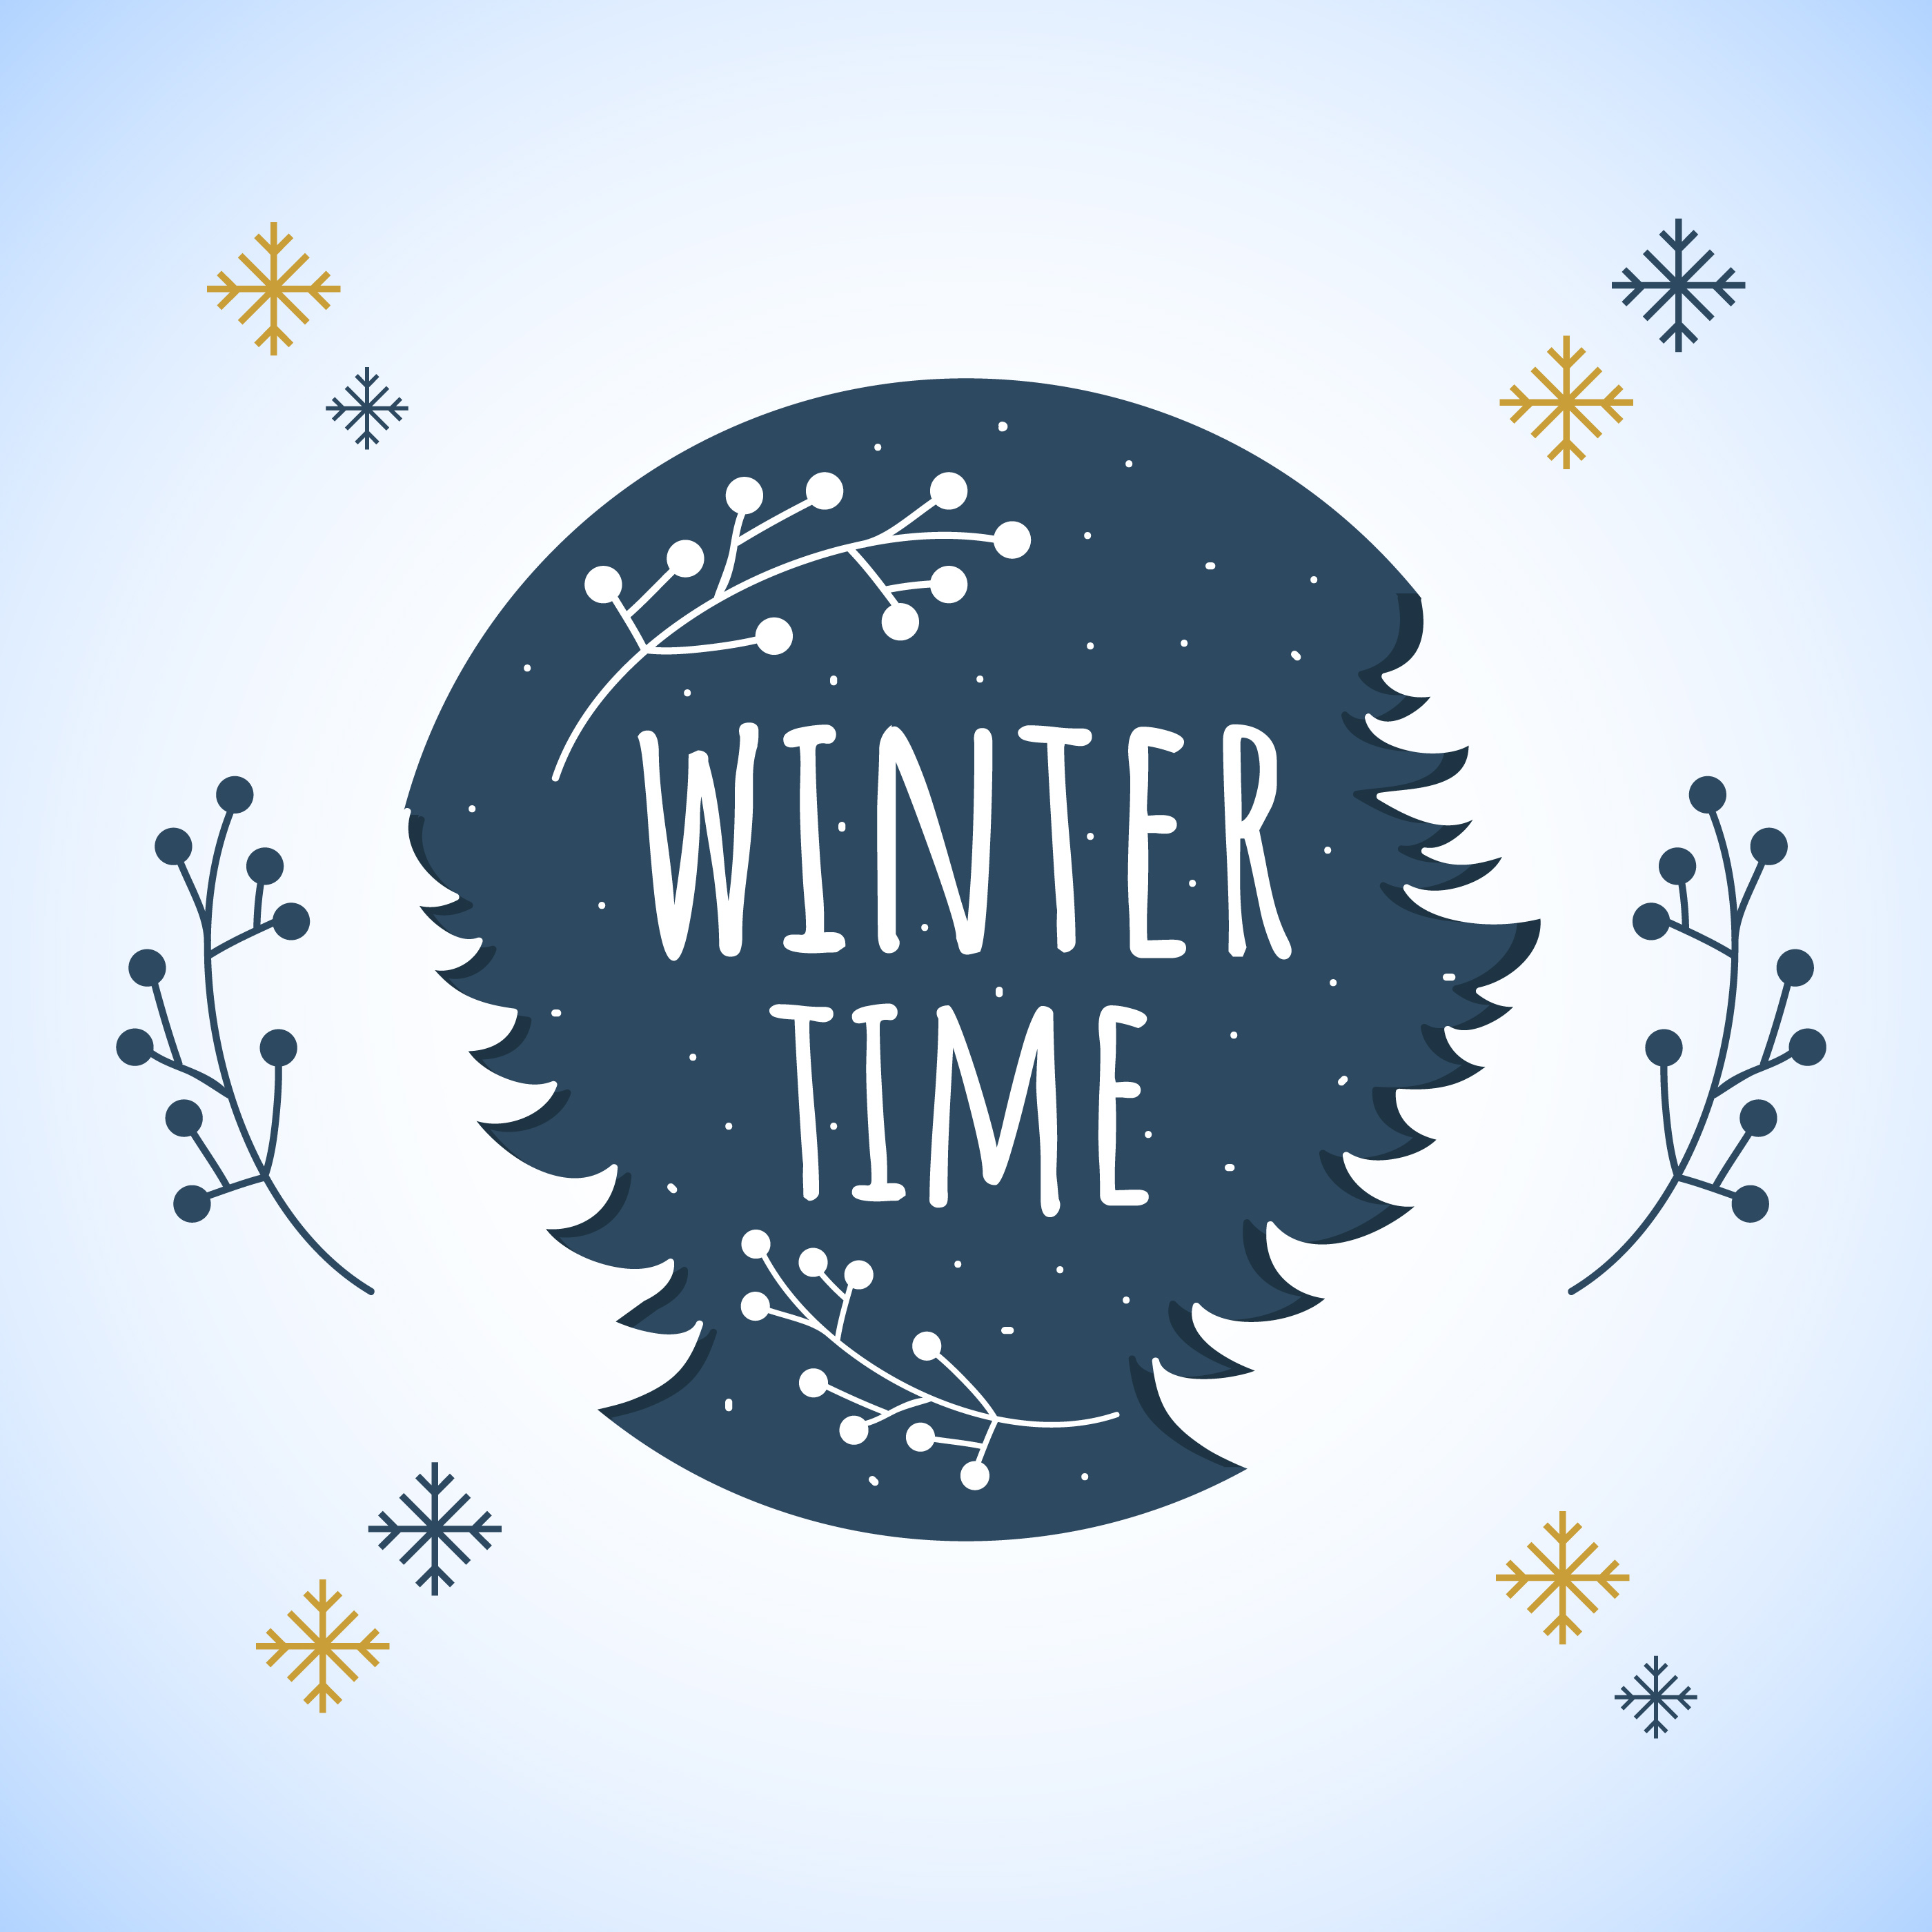  Winter  Time Vector  276034 Download Free Vectors  Clipart 